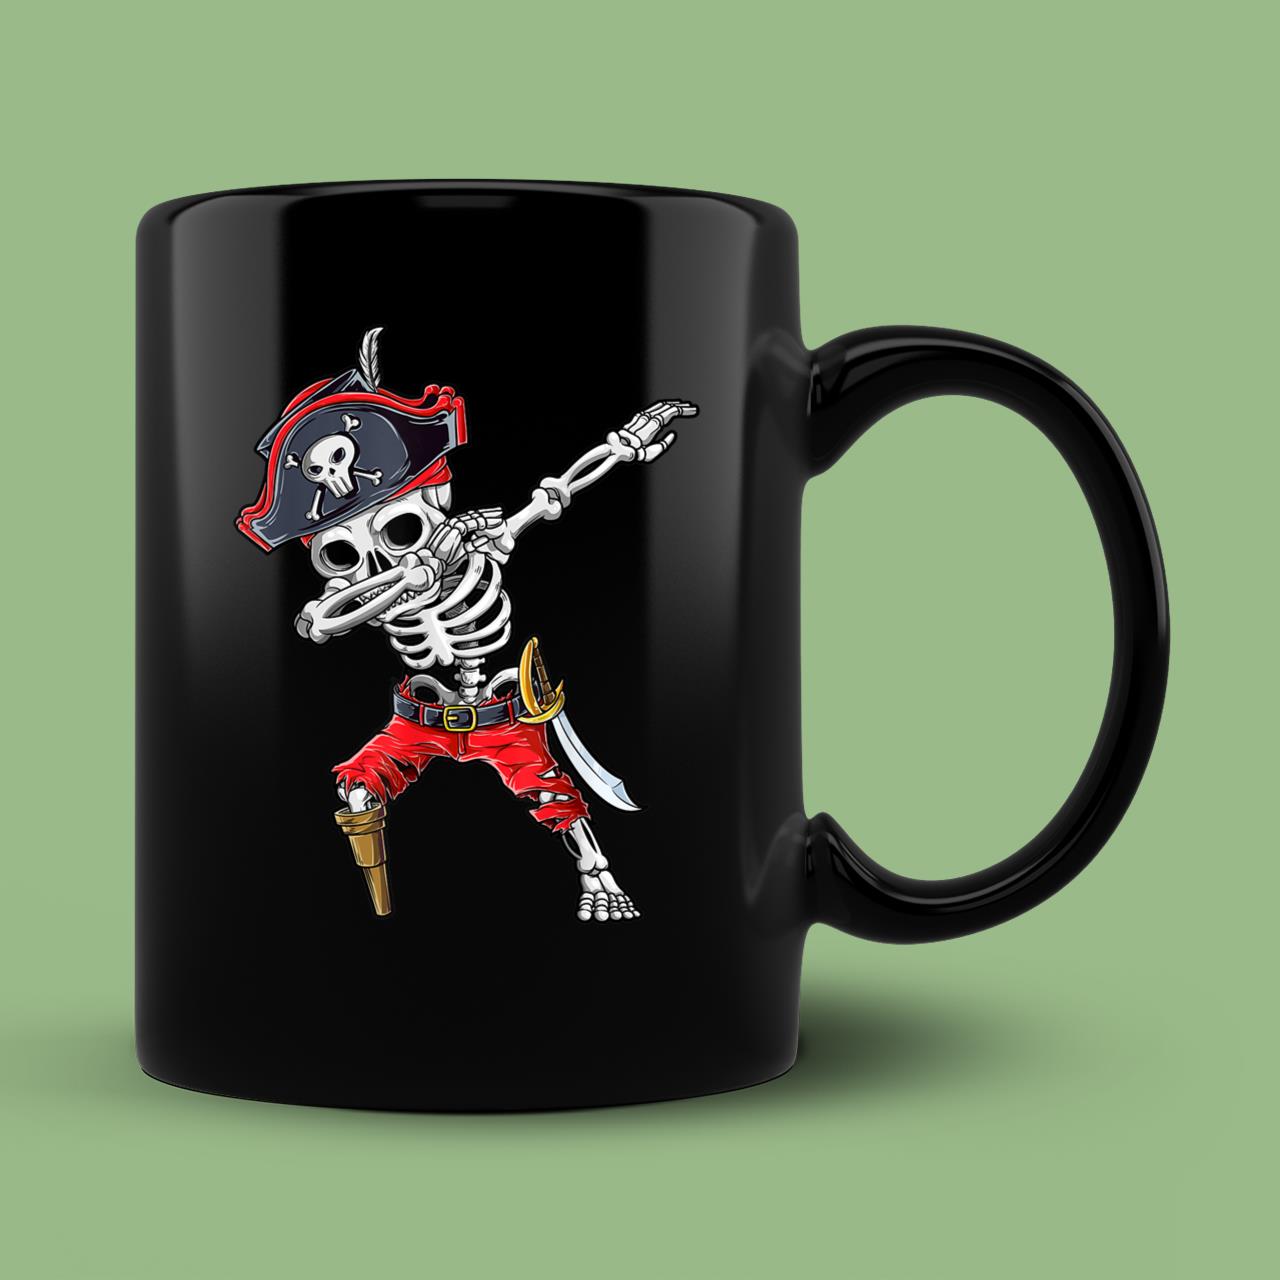 Skitongift Spooky Ceramic Novelty Coffee Mug Dabbing Skeleton Pirate Halloween Mug